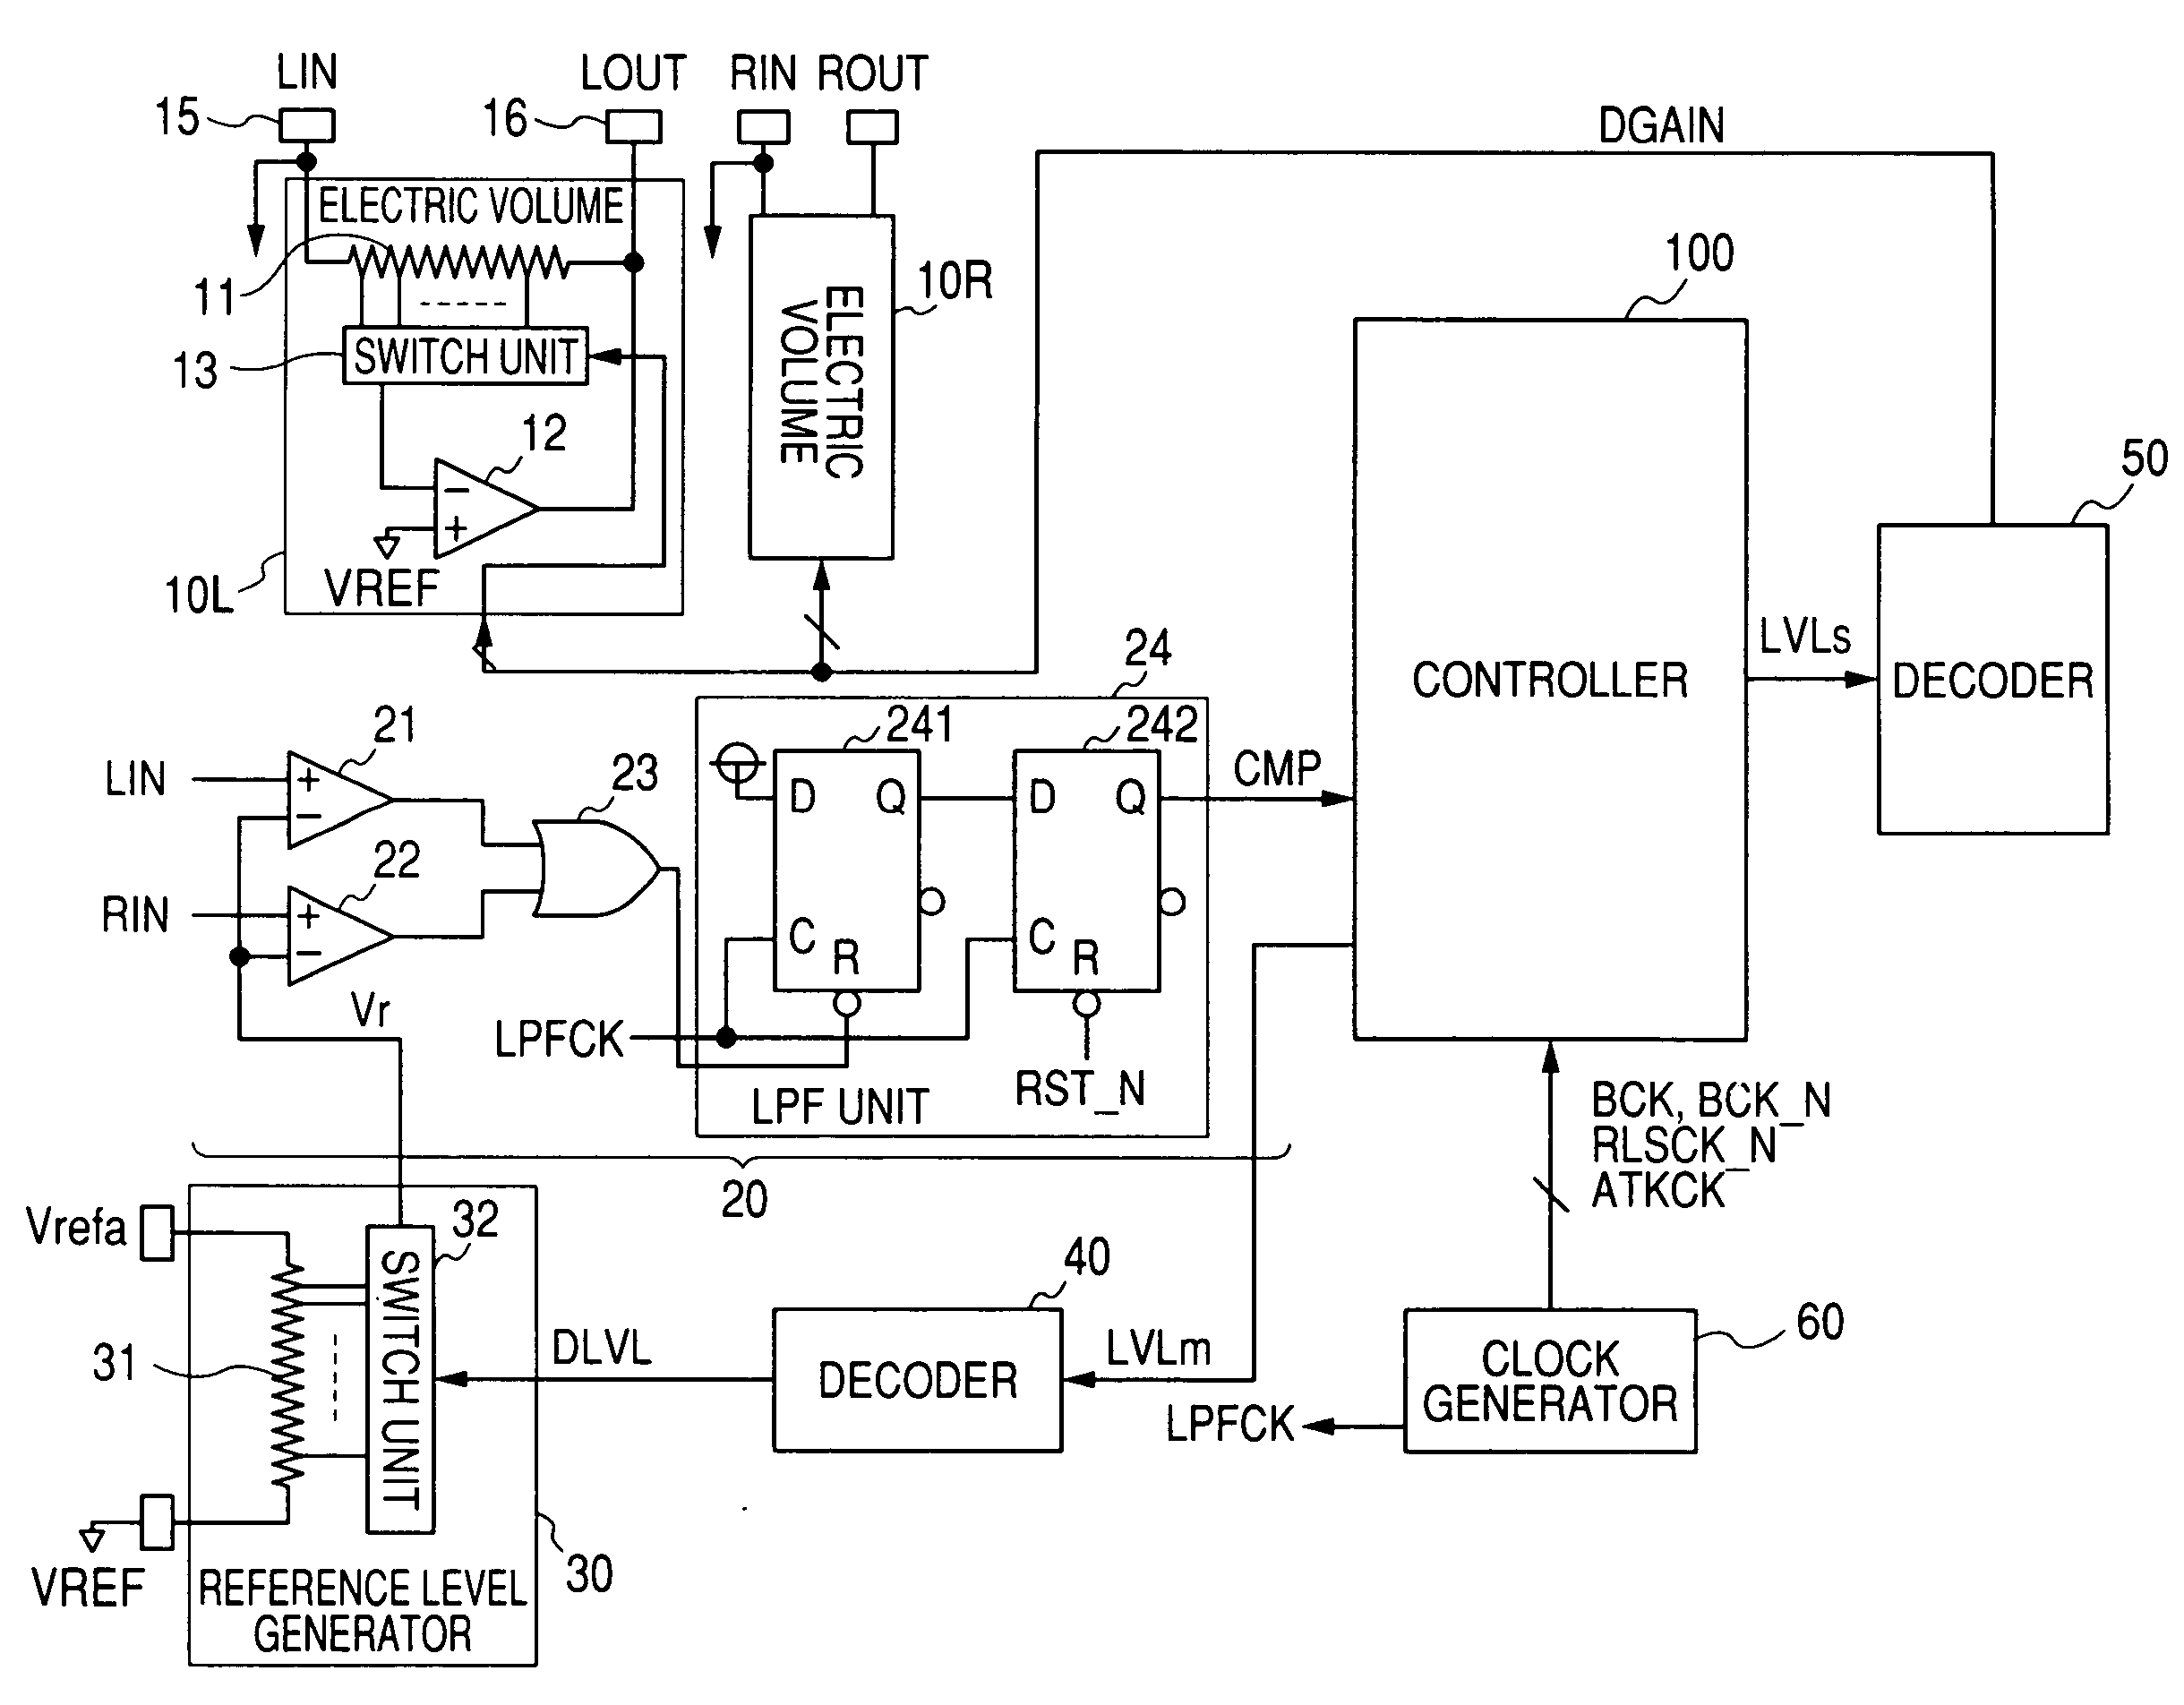 Automatic gain control circuit